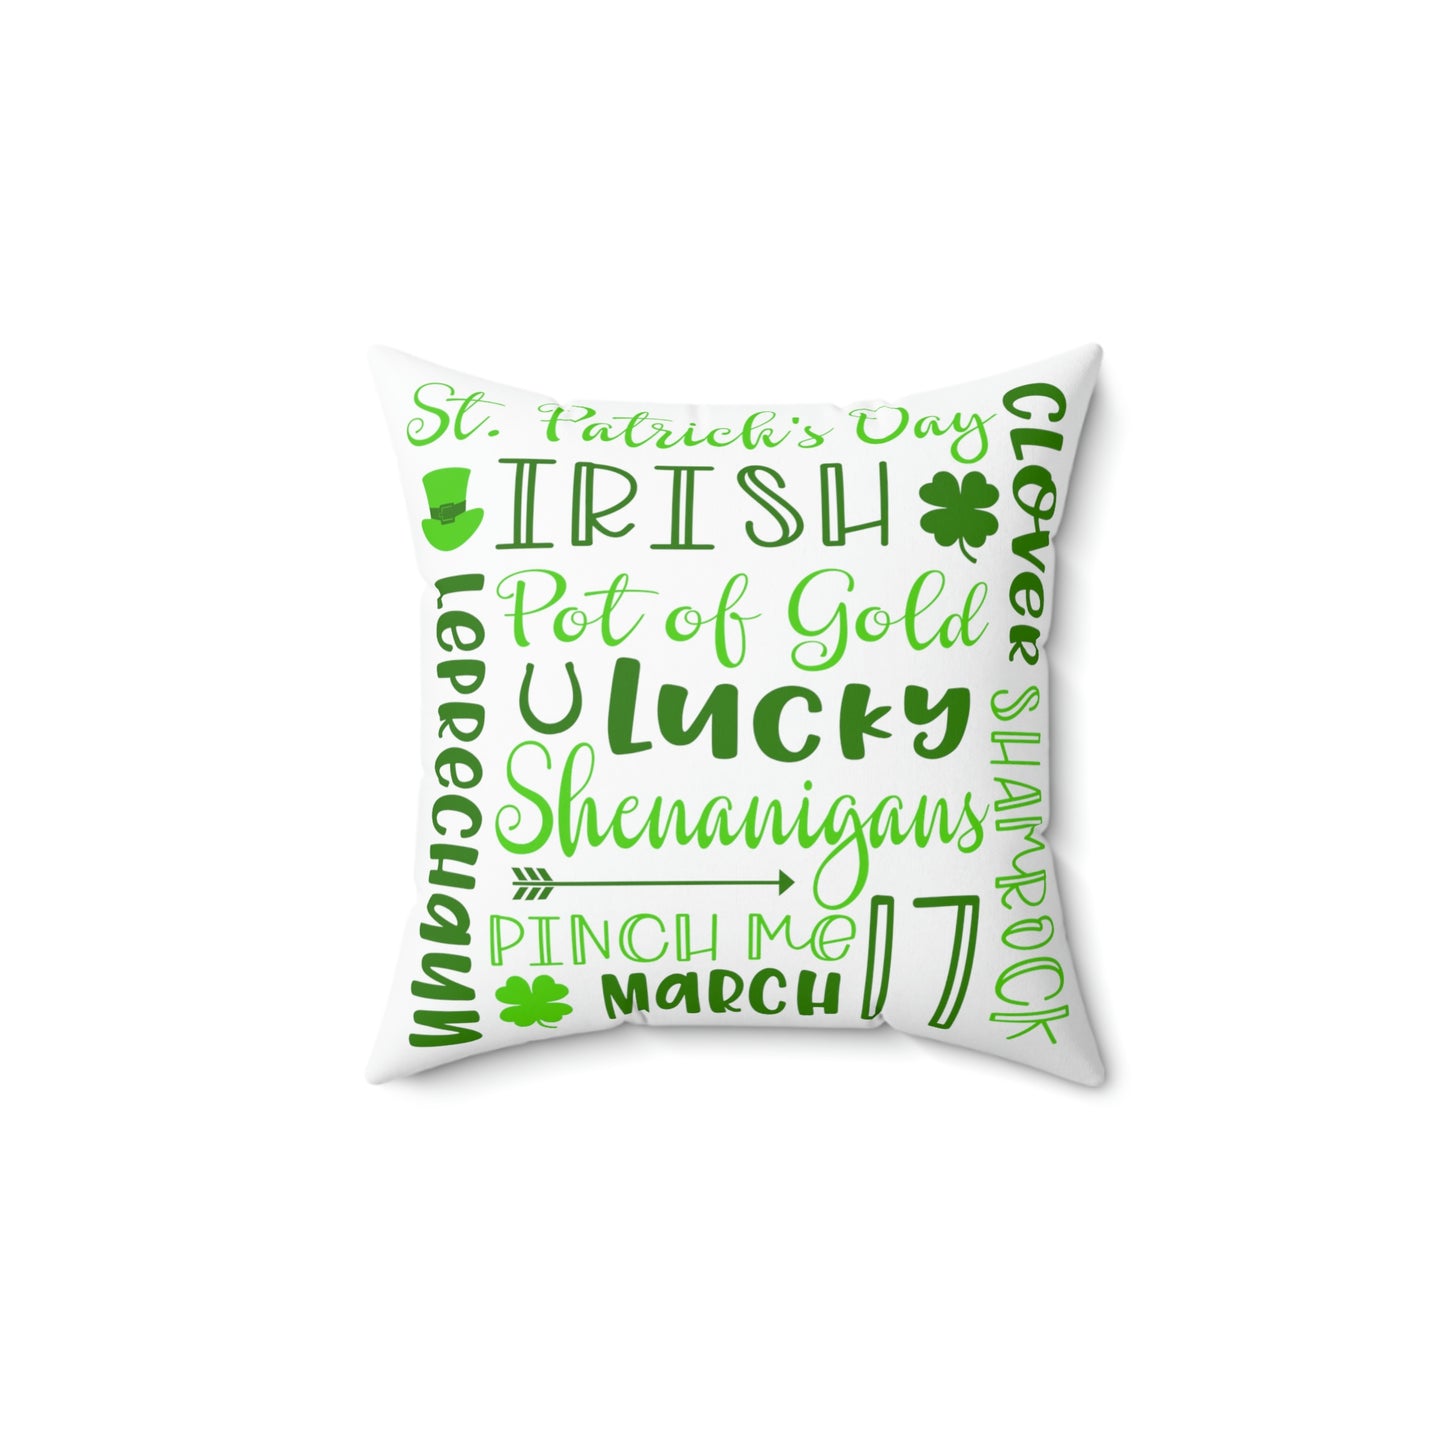 St Patricks day pillow